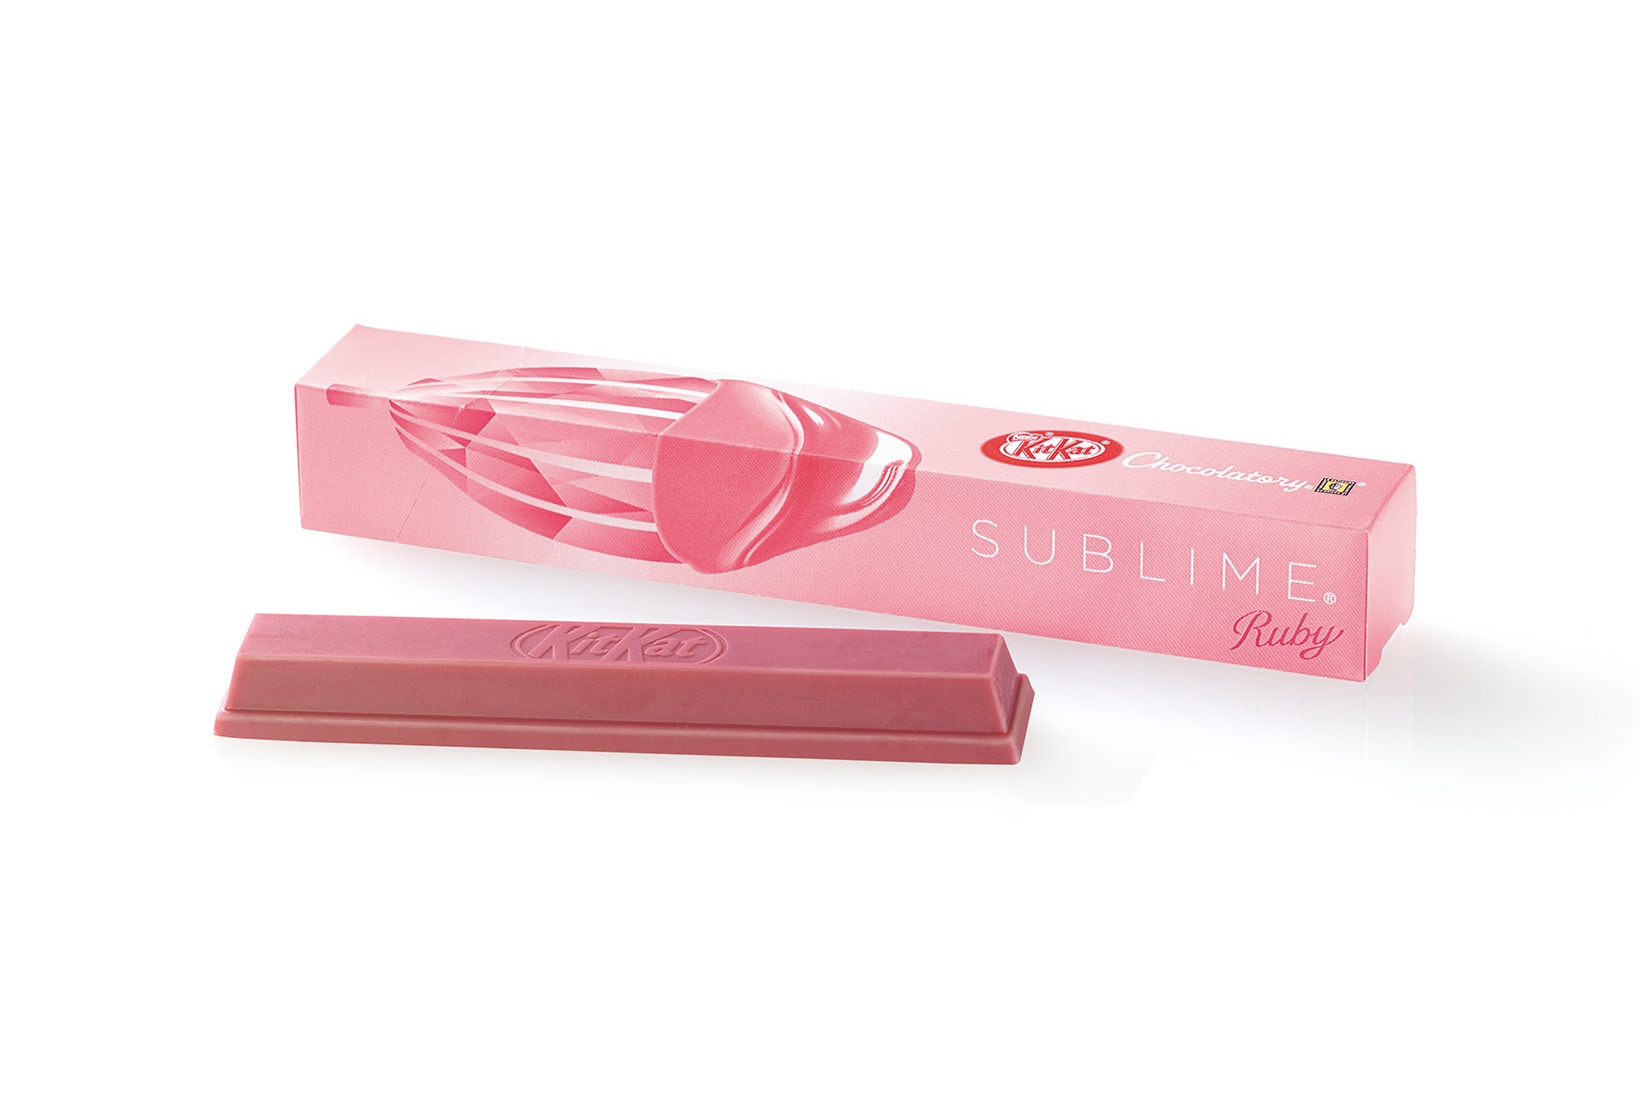 millennial-pink-kit-kat-chocolatory-sublime-ruby-00-1